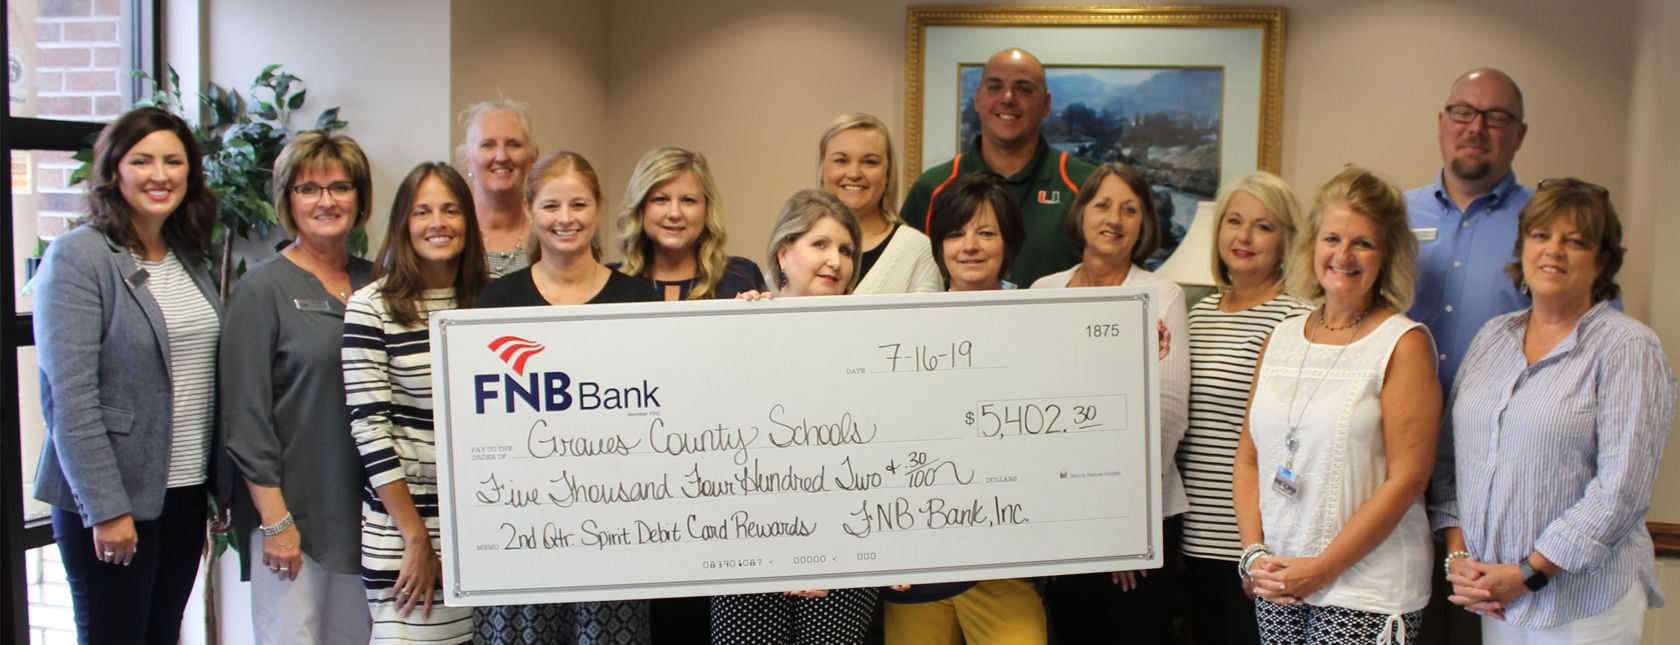 FNB Donates over $20500 to local schools through spirit debit card program